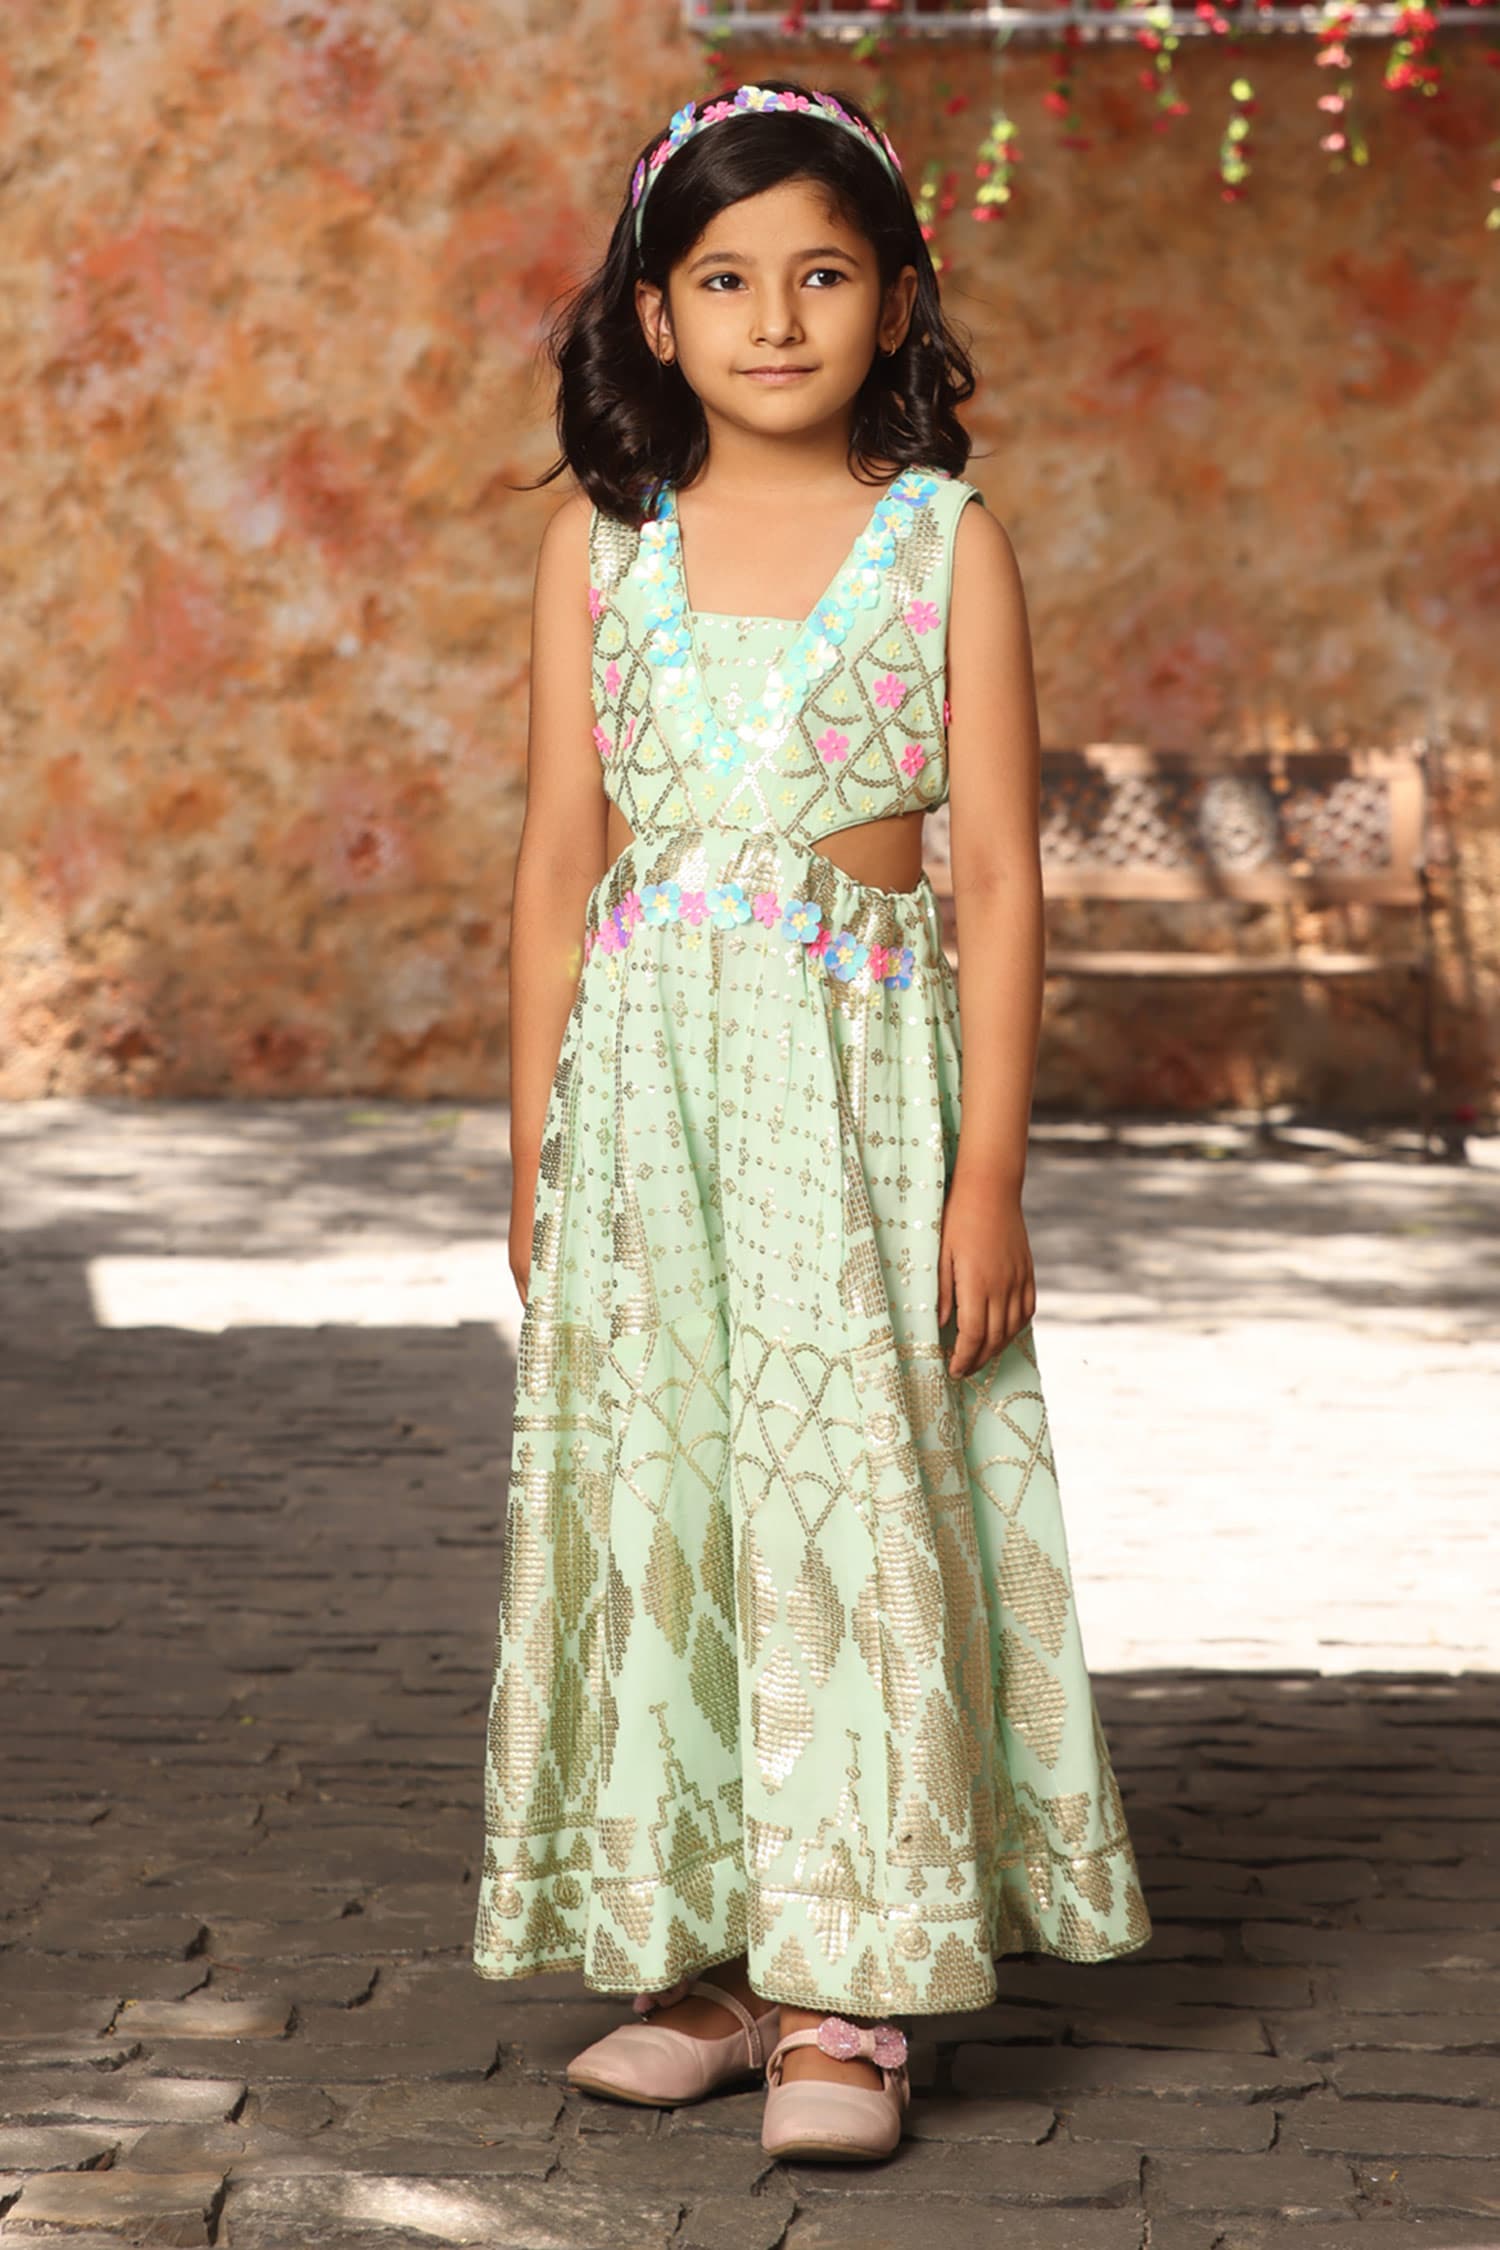 Pin by Teju Reddy on kids sharewani | Kids dress, Dresses kids girl, Kids  dress collection